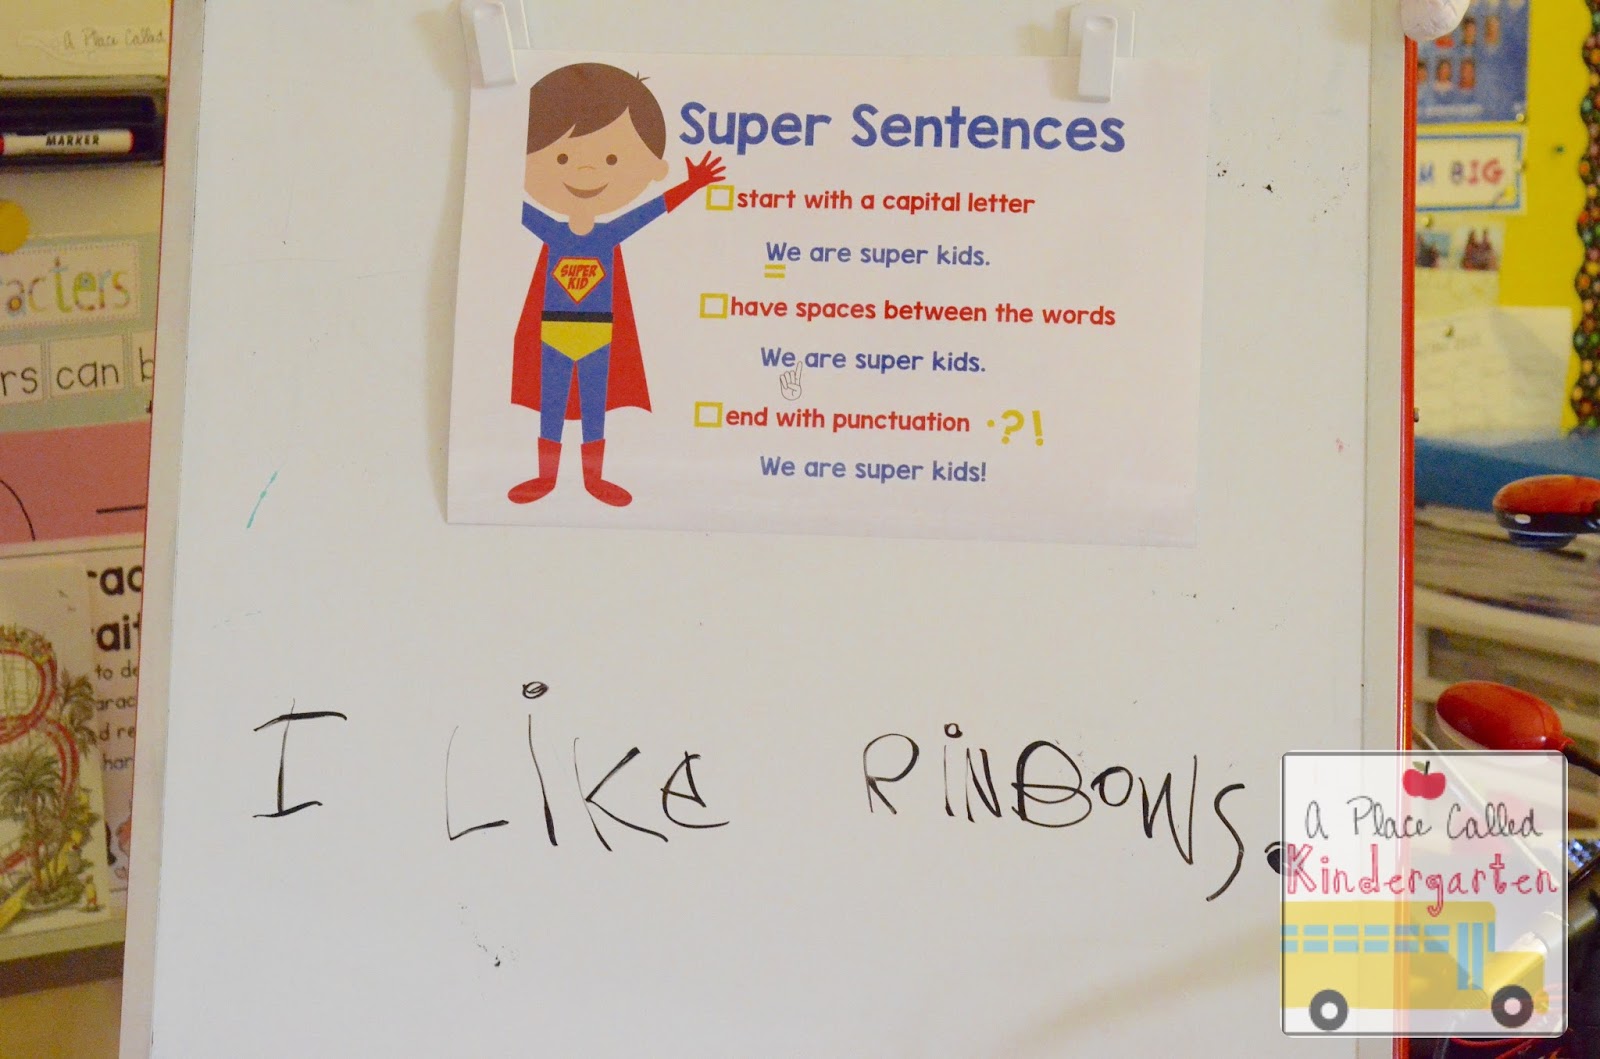 a-place-called-kindergarten-super-sentences